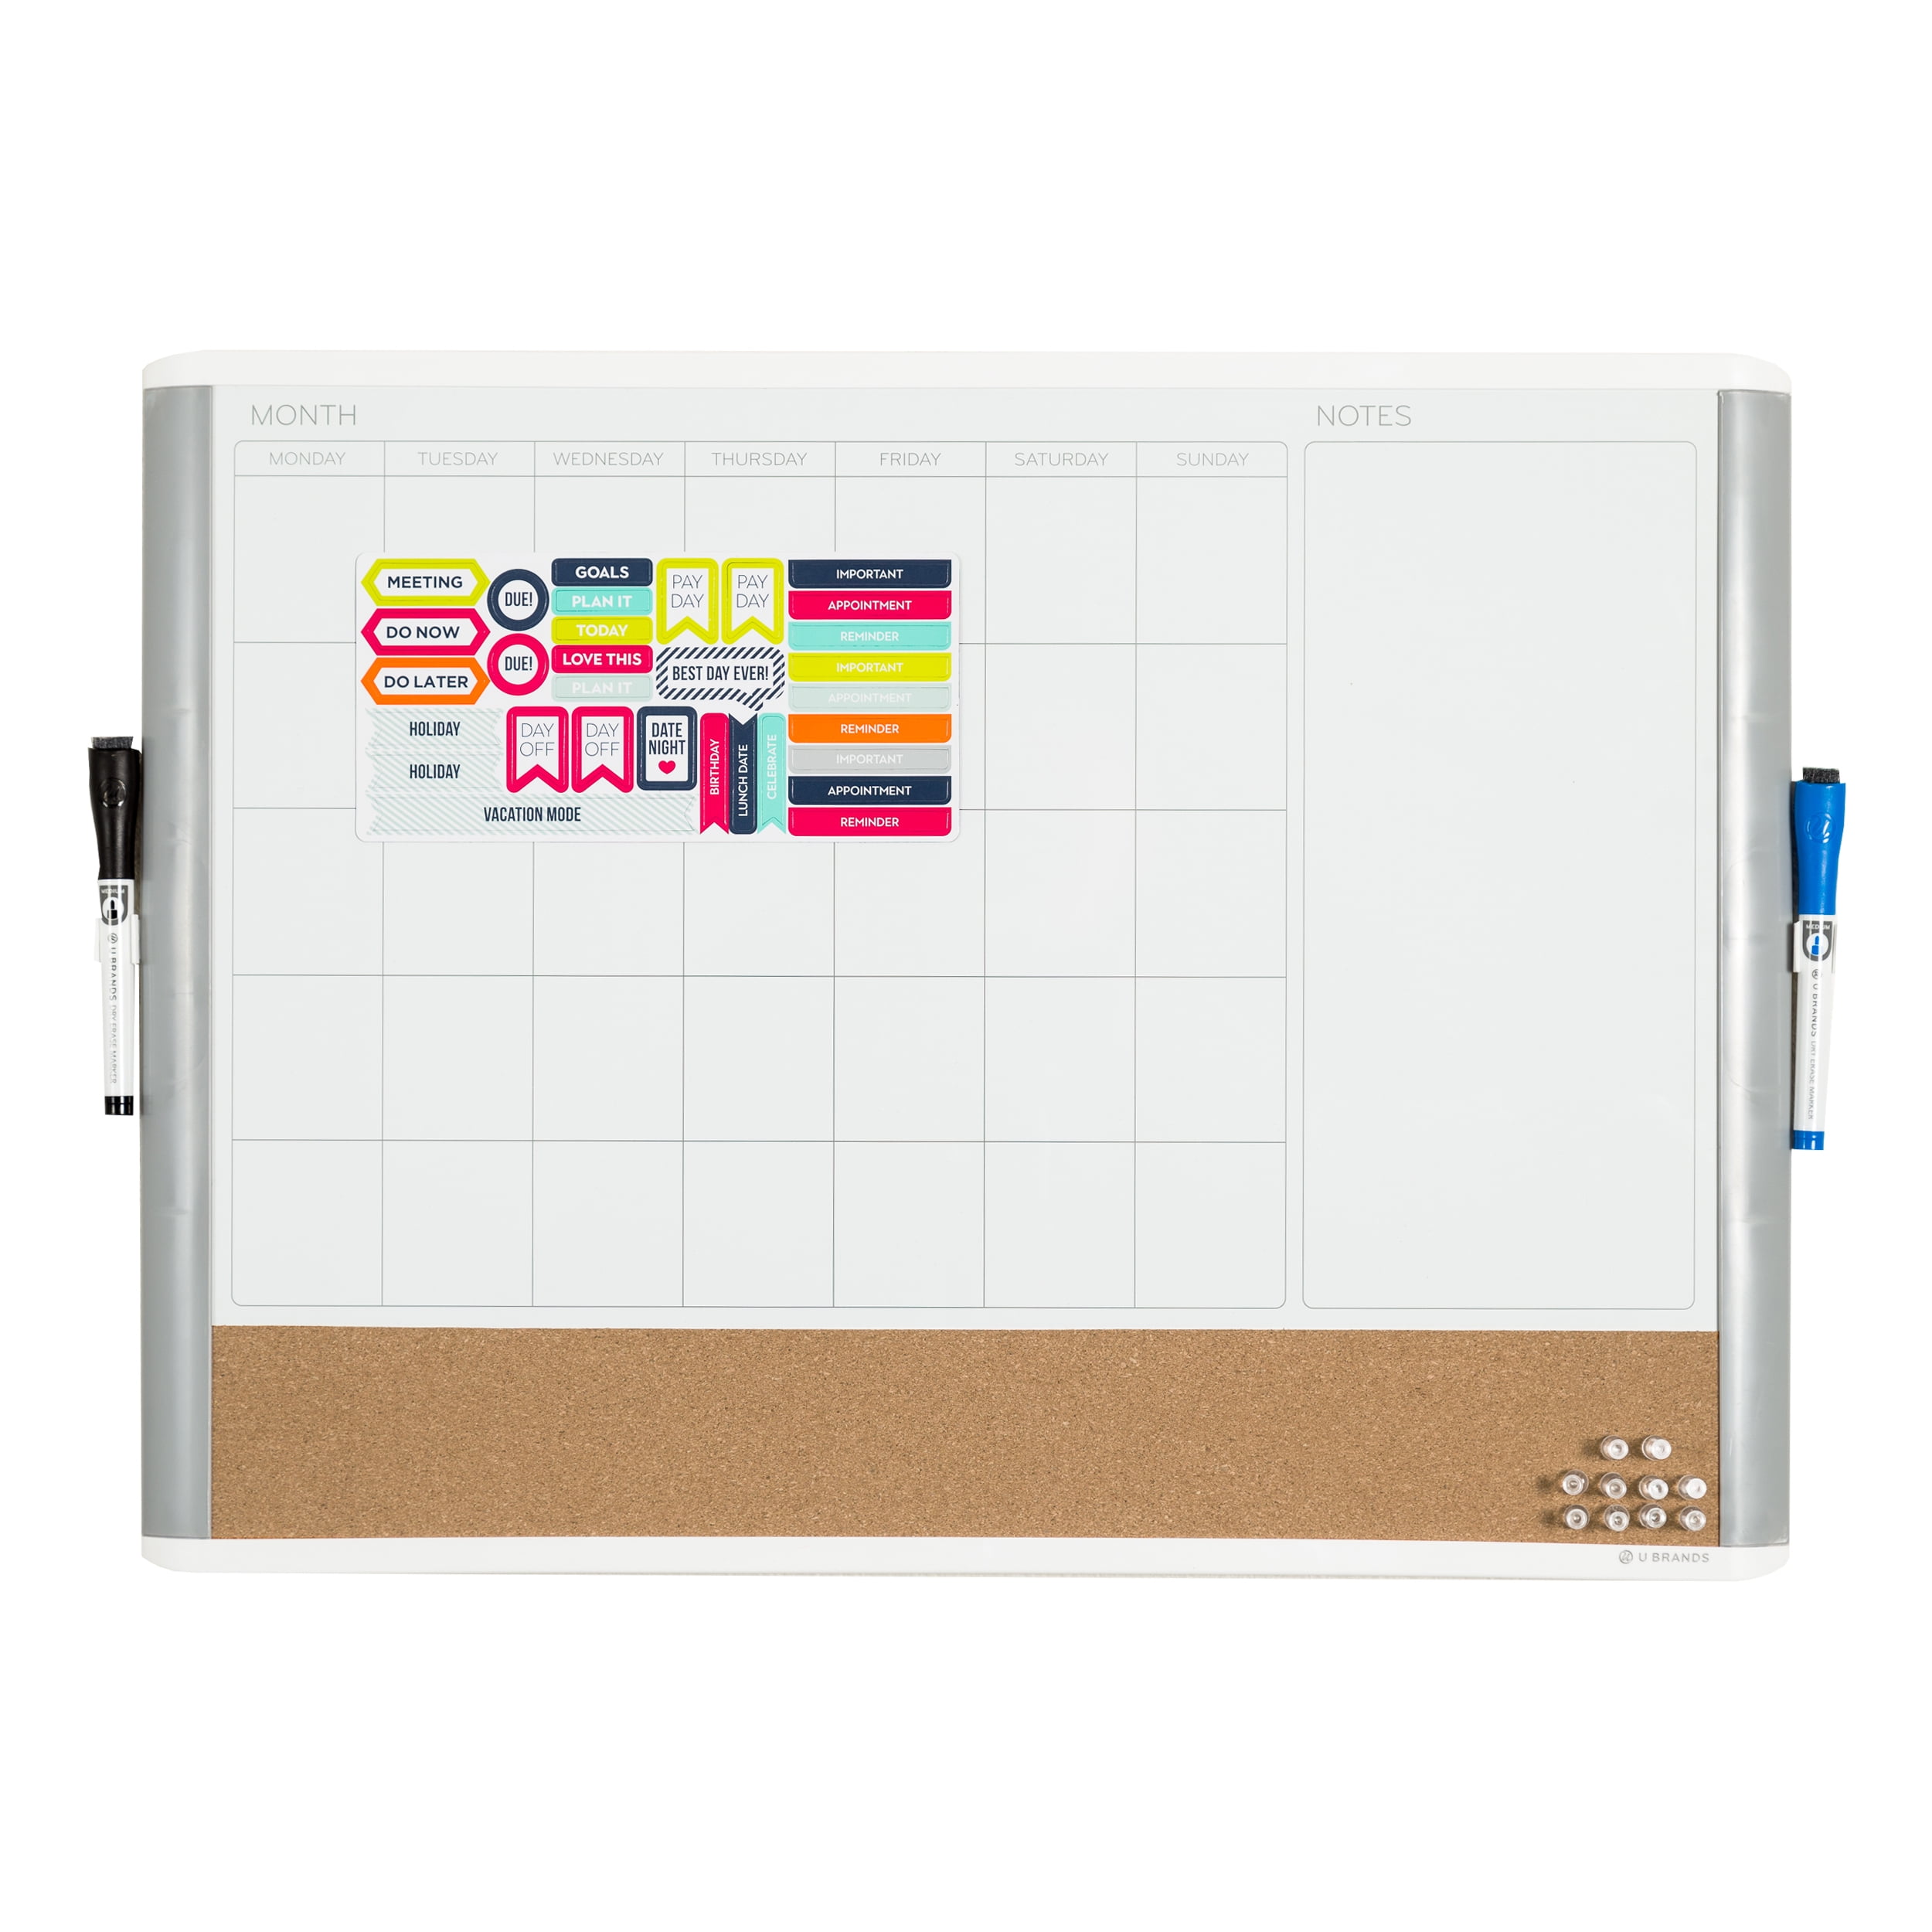 U Brands 3-In-1 Dry Erase Calendar Whiteboard, White and Gray, 3214U